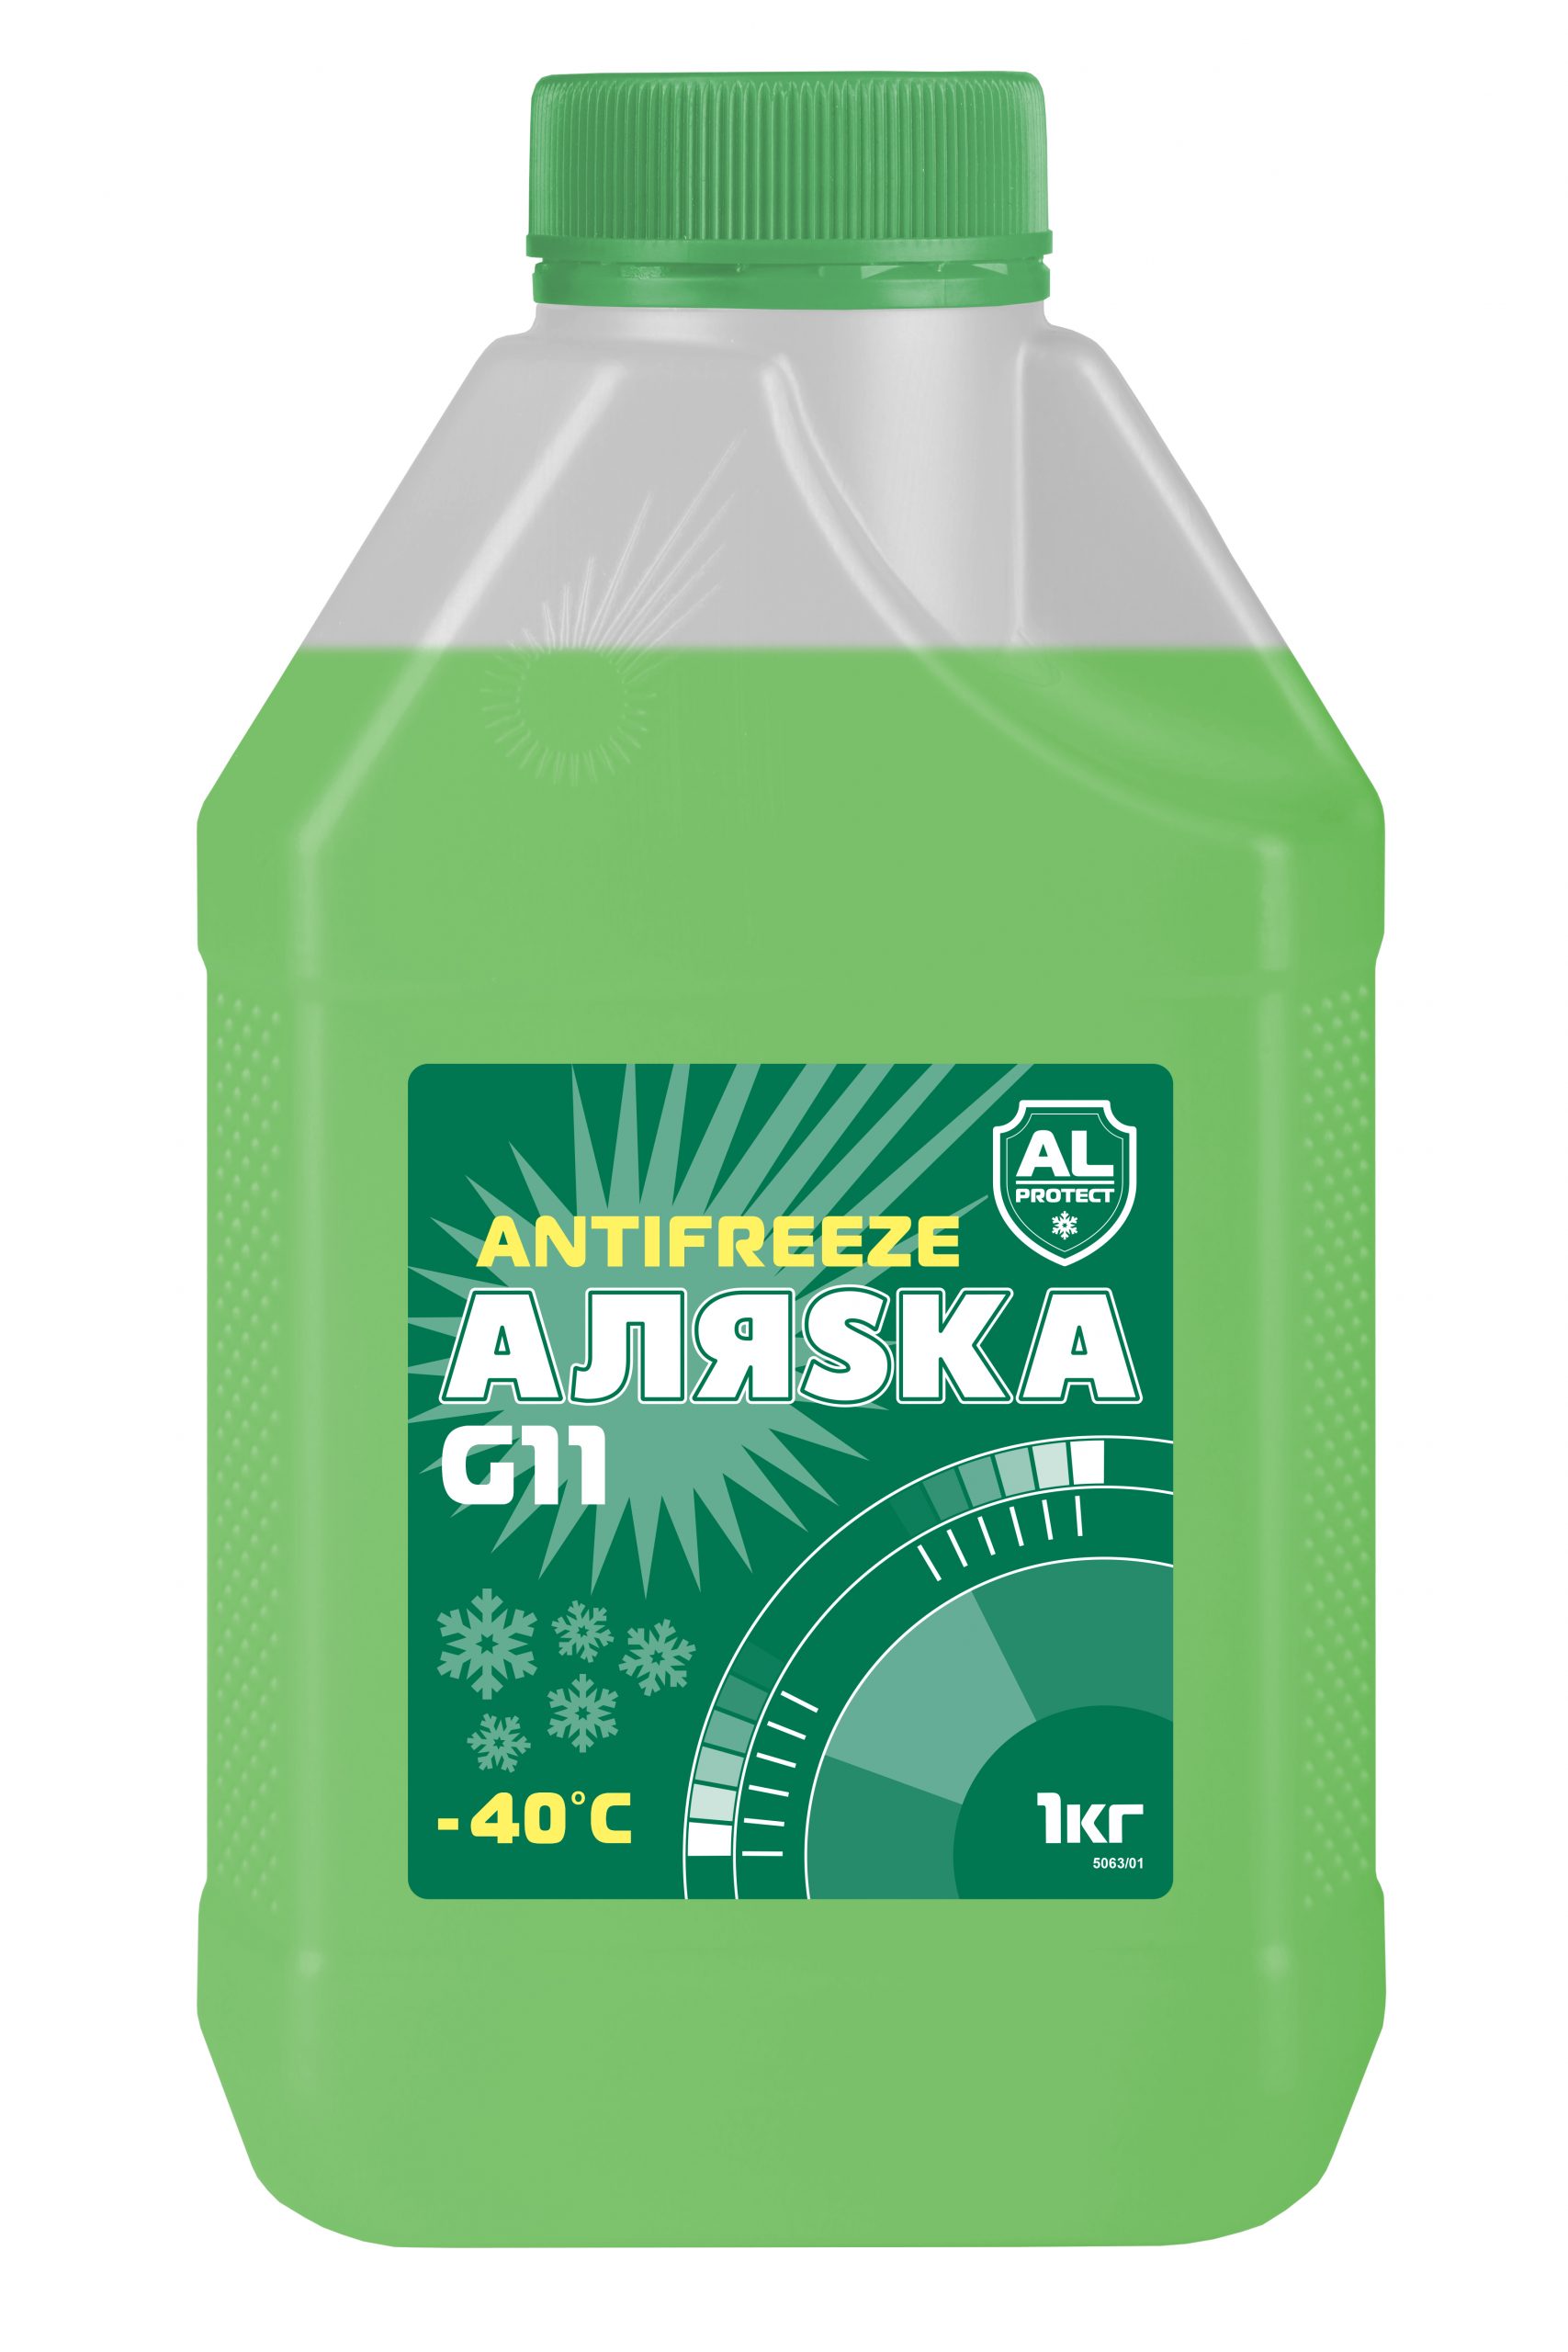 Антифриз (-40) зеленый G-11 Аляска   1кг. /кор.8шт./